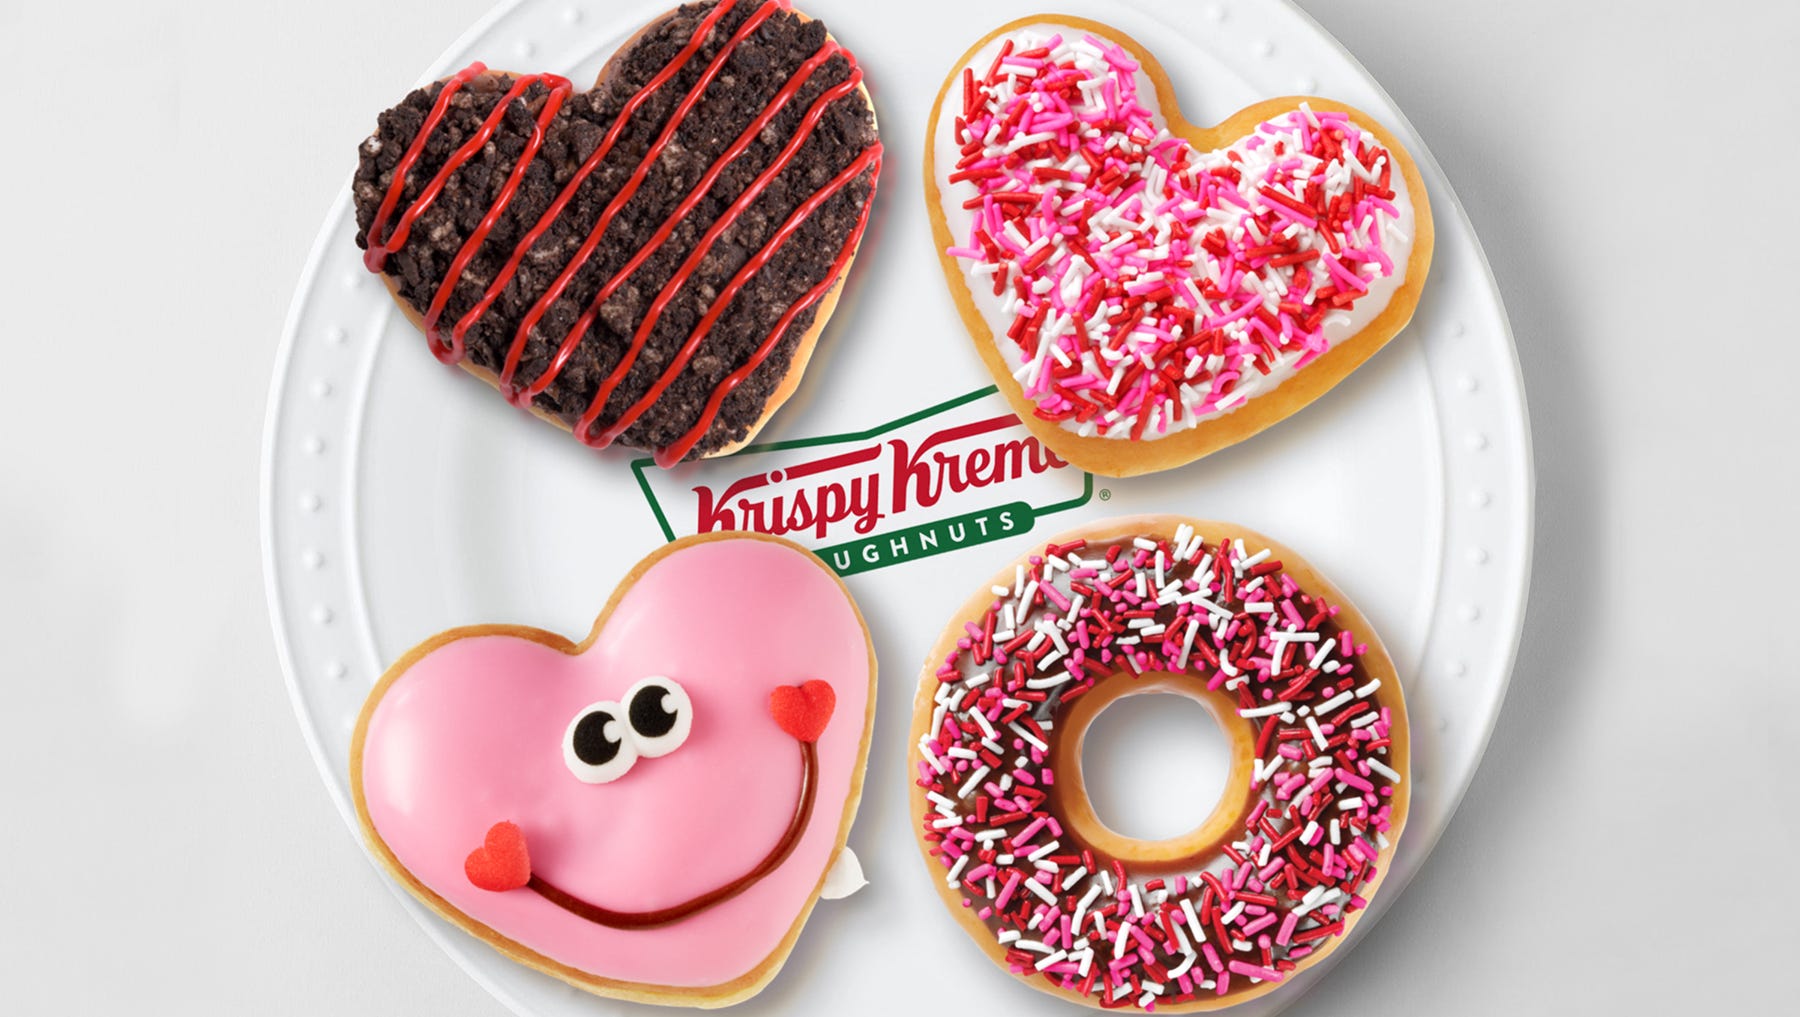 Krispy Kreme Doughnuts offering Valentine-themed treats